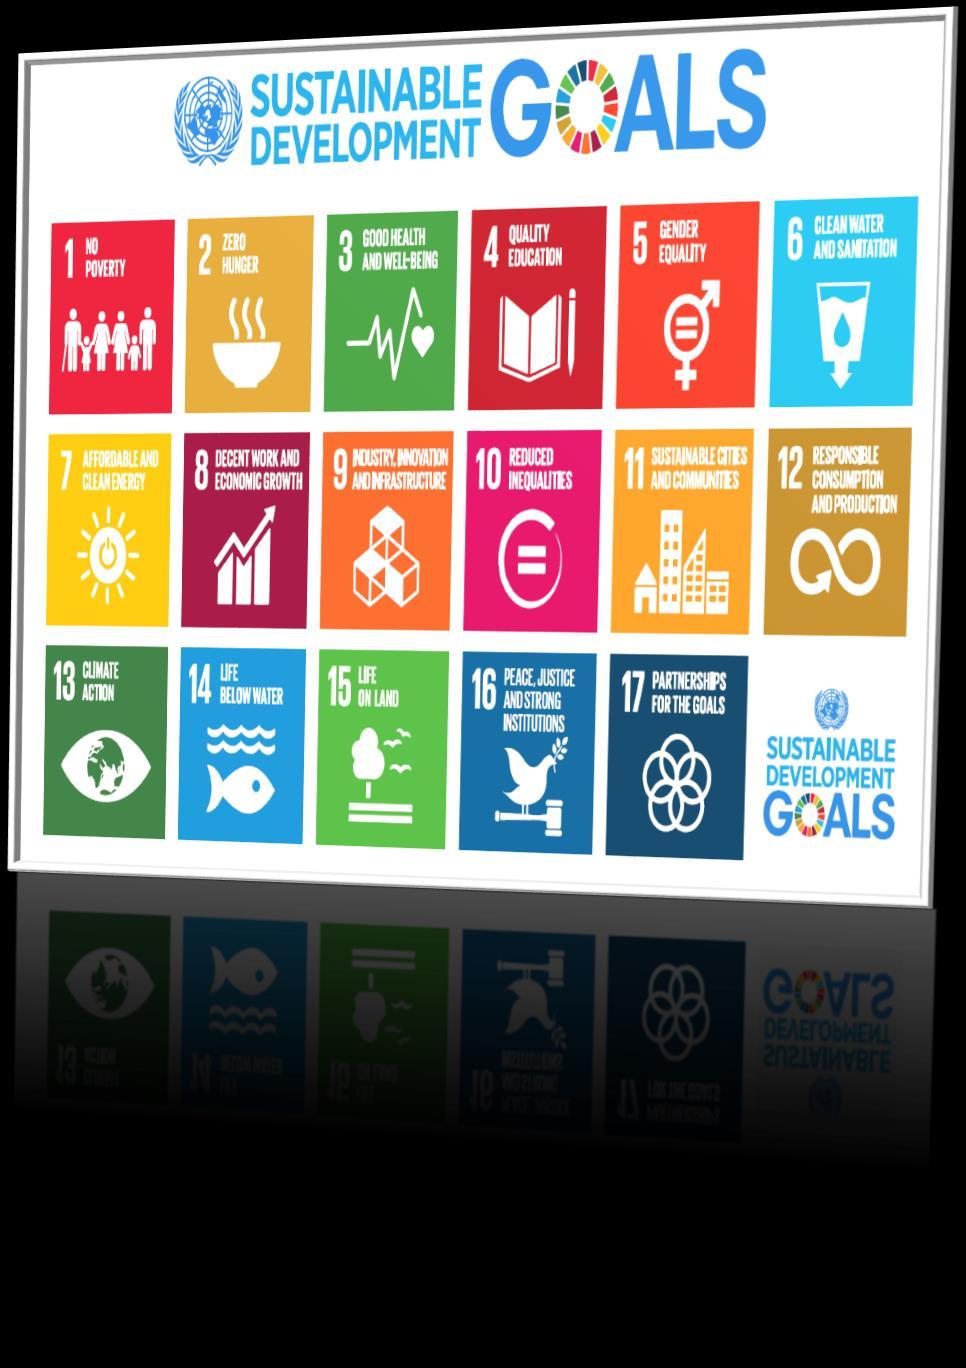 Agenda 2030 του ΟΗΕ για την Αειφόρο ανάπτυξη Η σύνδεση της αειφόρου ανάπτυξης µε την εκπαίδευση, γίνεται σαφής Agenda 2030 του ΟΗΕ για την Αειφόρο